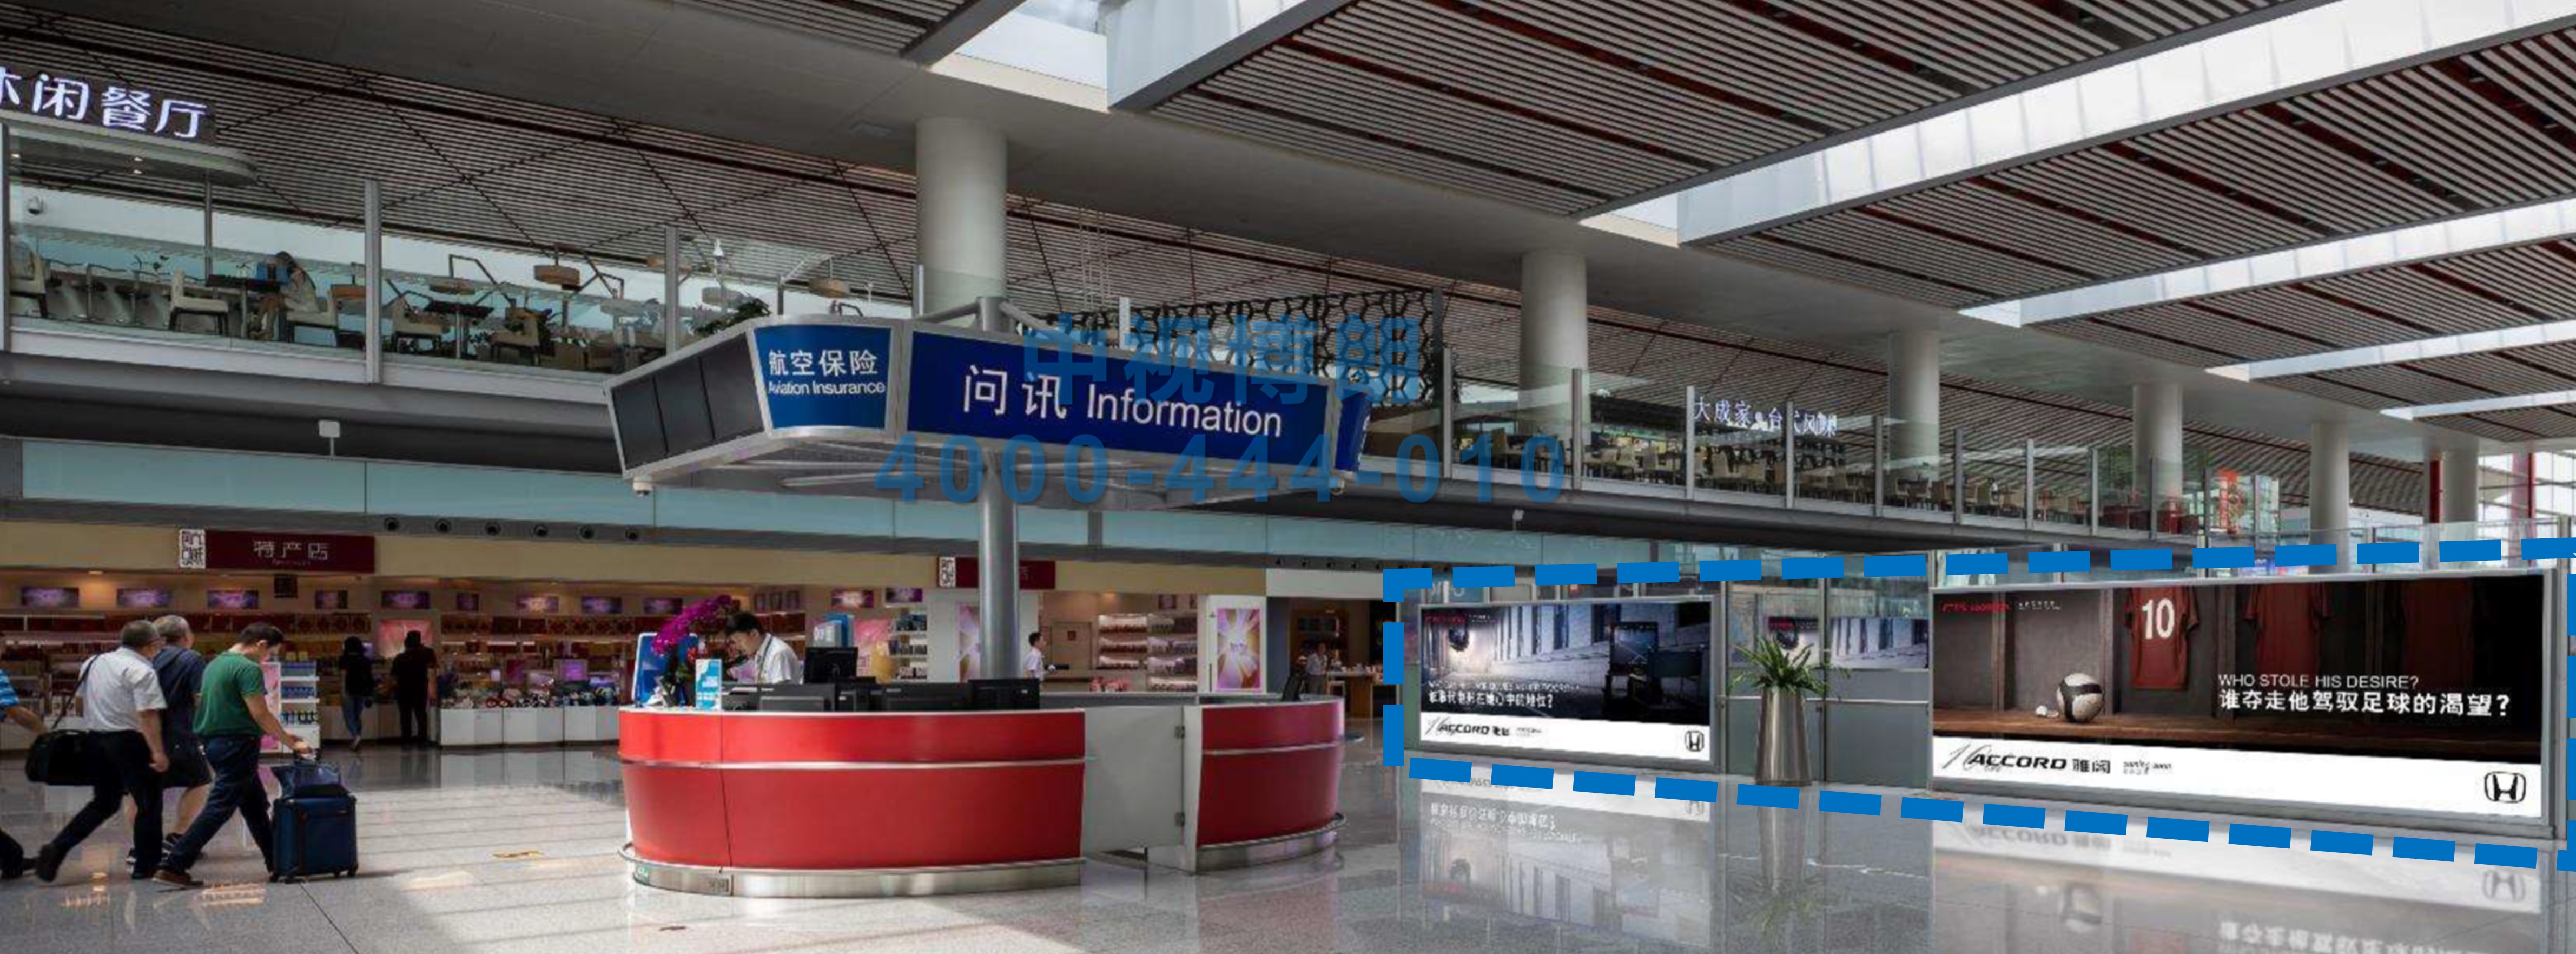 北京首都机场广告-T3 Waiting Area Landing Light Box D021